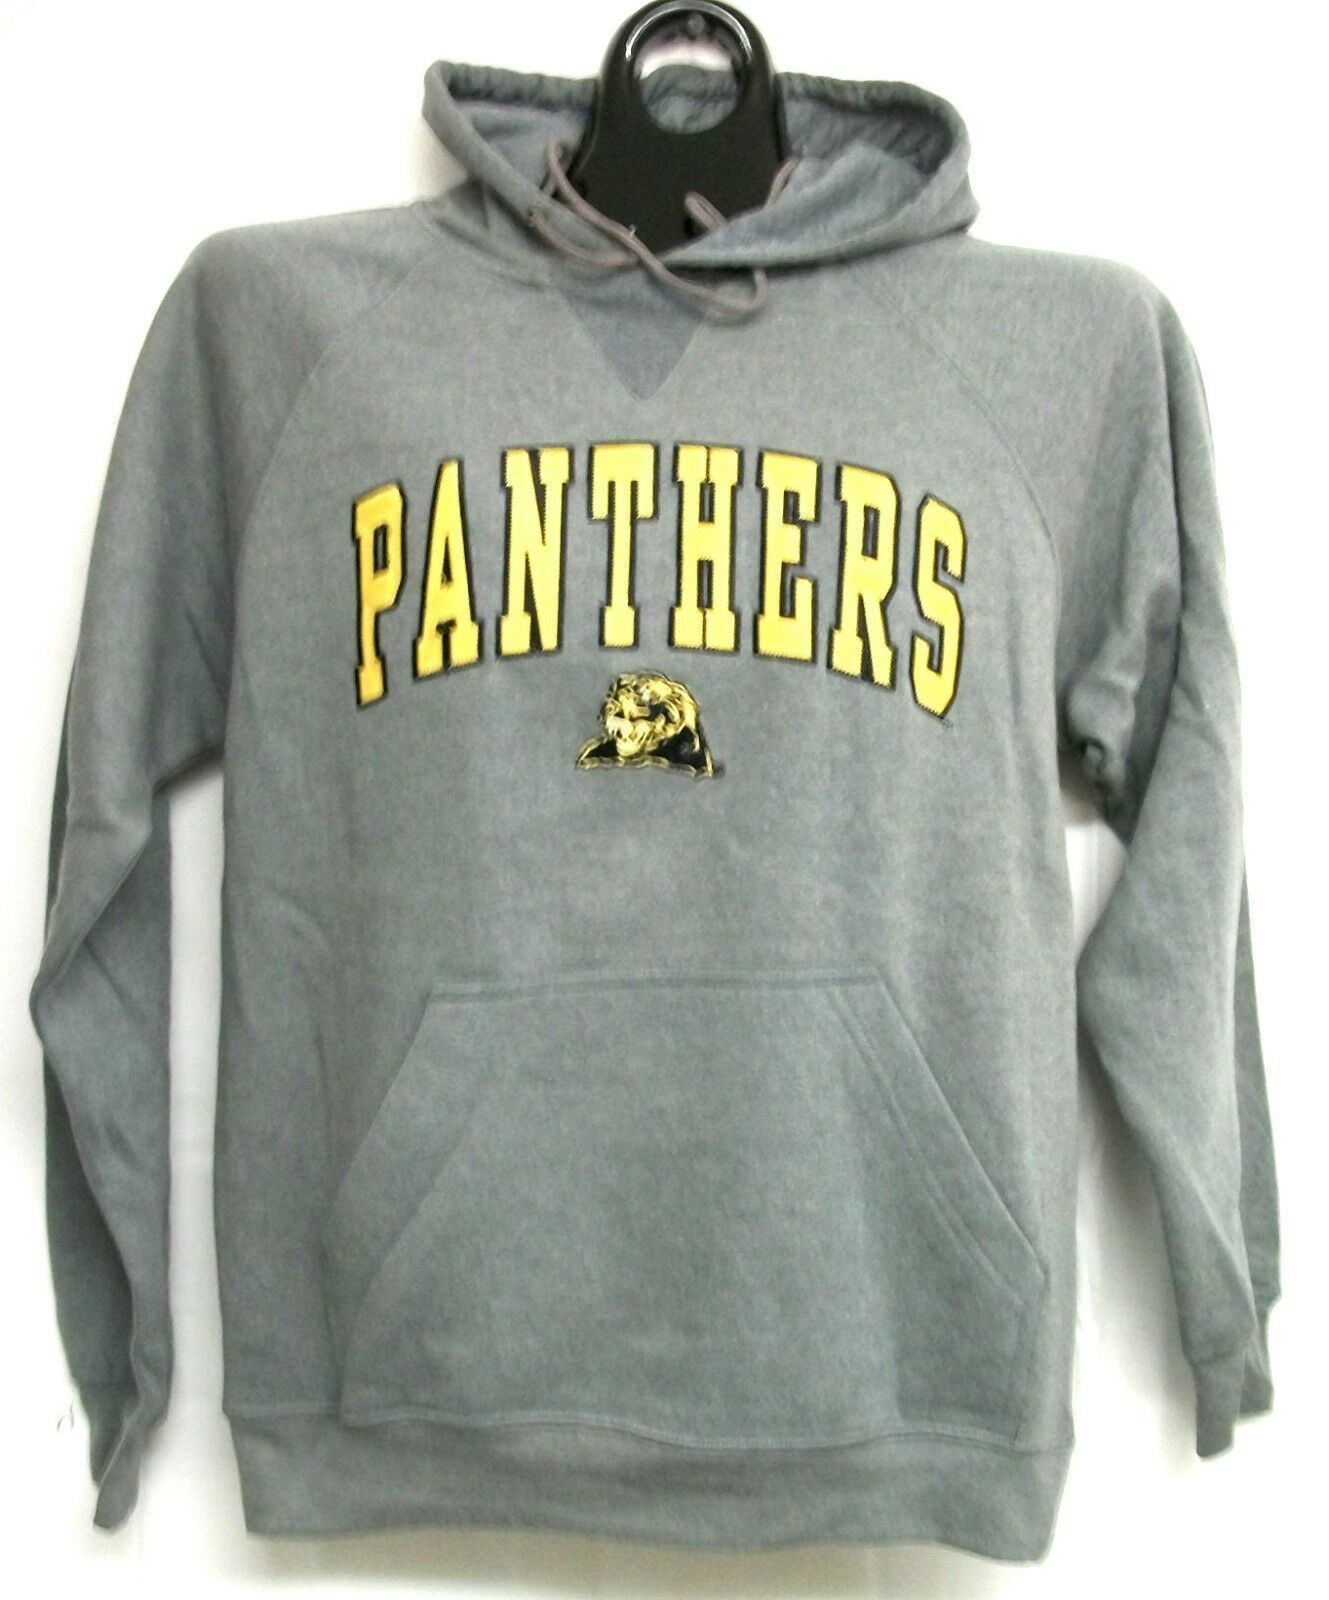 University of Pittsburgh Panthers Grey Hooded Sweatshirt Large - $25.00